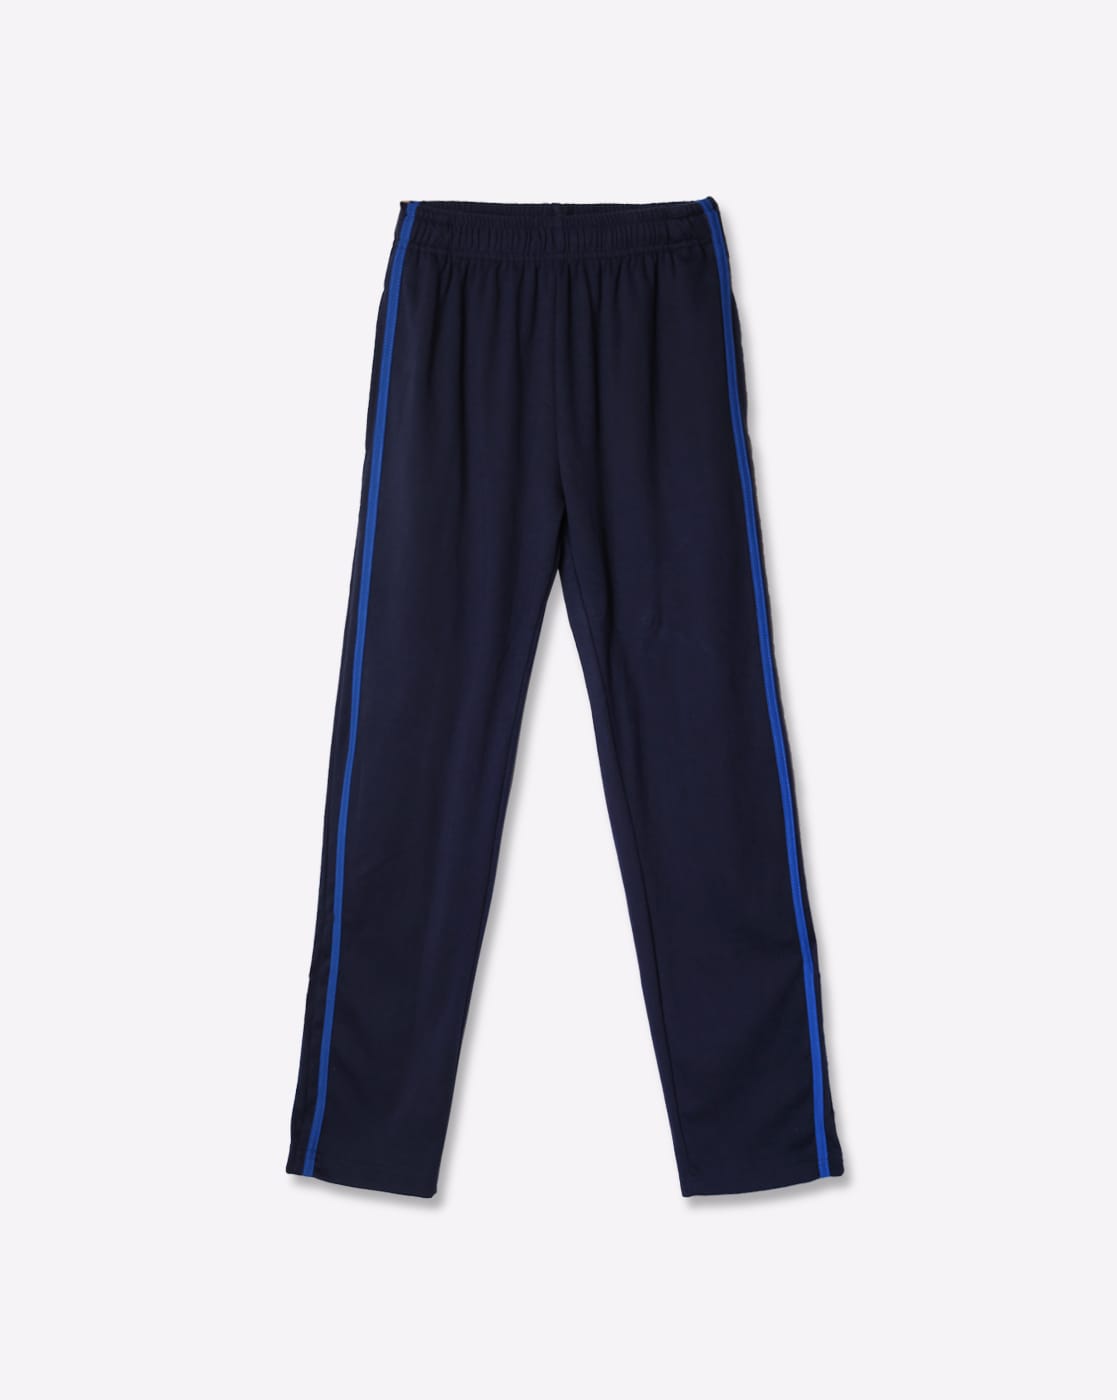 Buy Men Solid Regular Fit Blue Track Pants Online  580907  Allen Solly